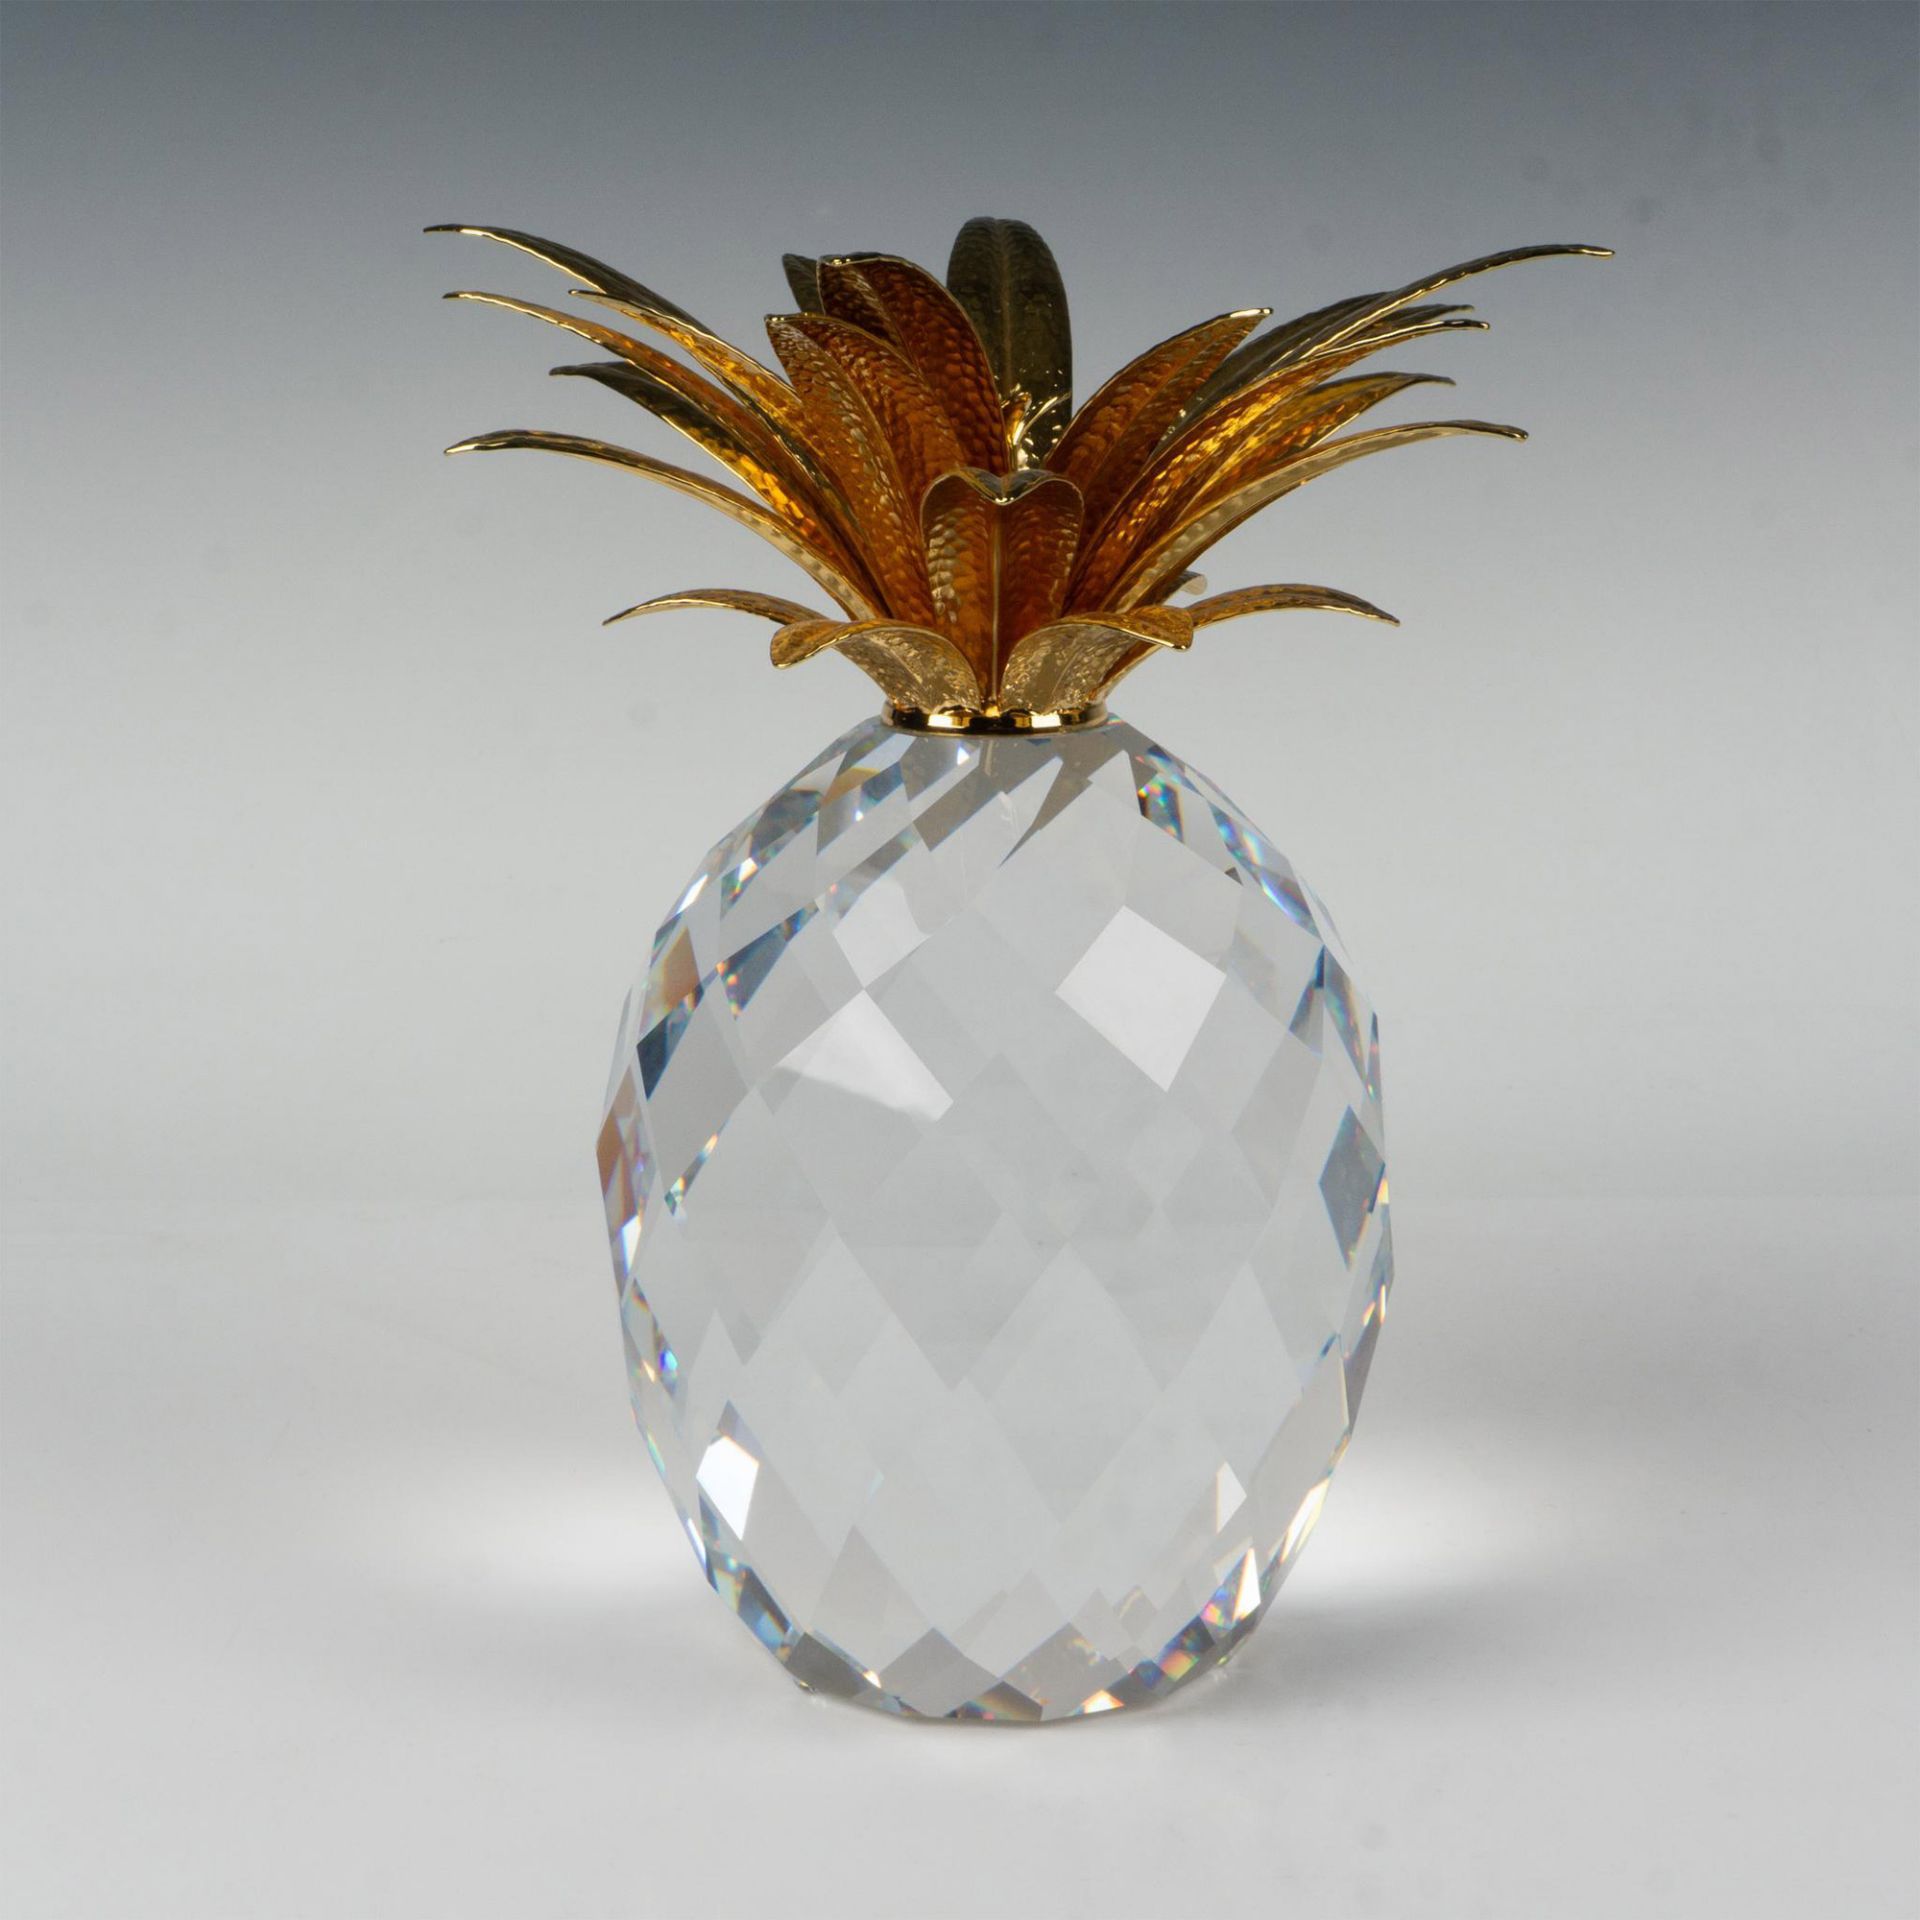 Swarovski Crystal Figurine, Giant Pineapple - Image 2 of 4